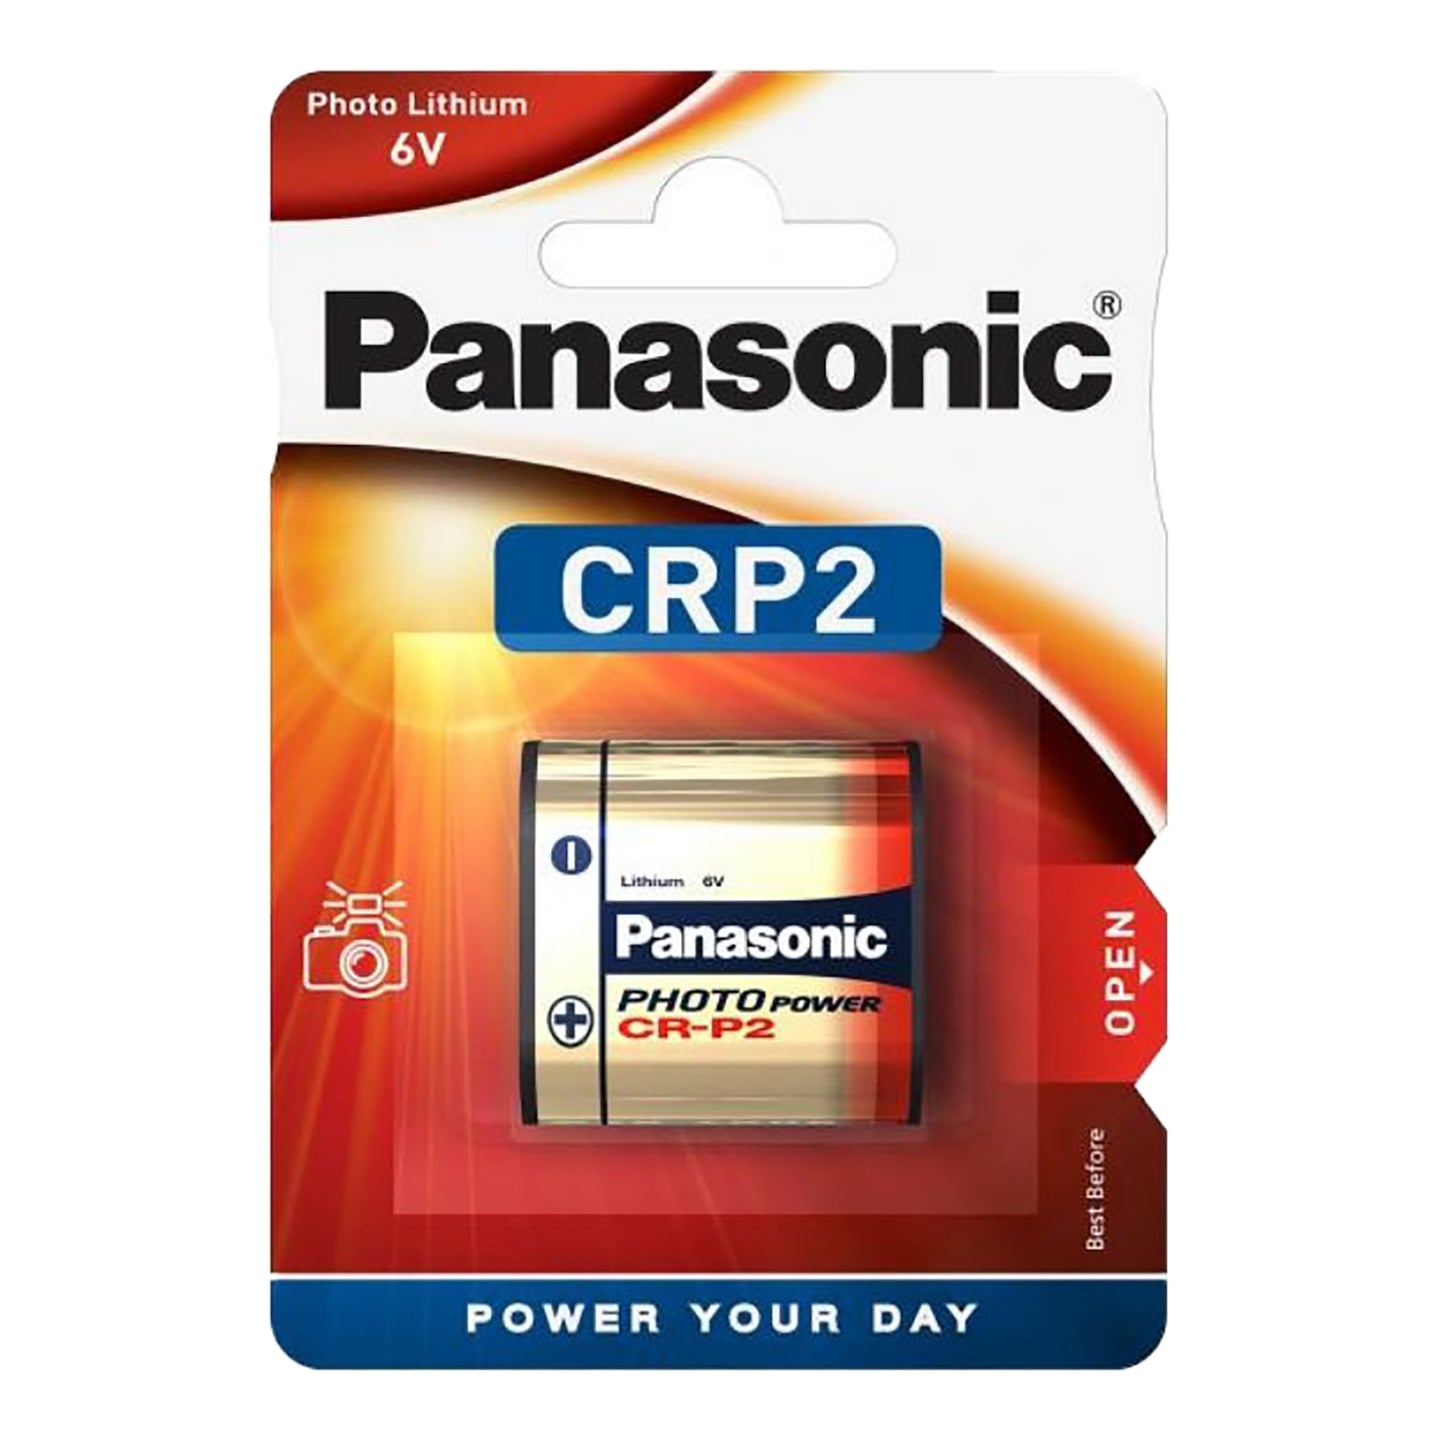 PAN-CRP2-1 - литиевая батарейка, 6 Вольт, Panasonic CRP2, 1 шт. в блистере